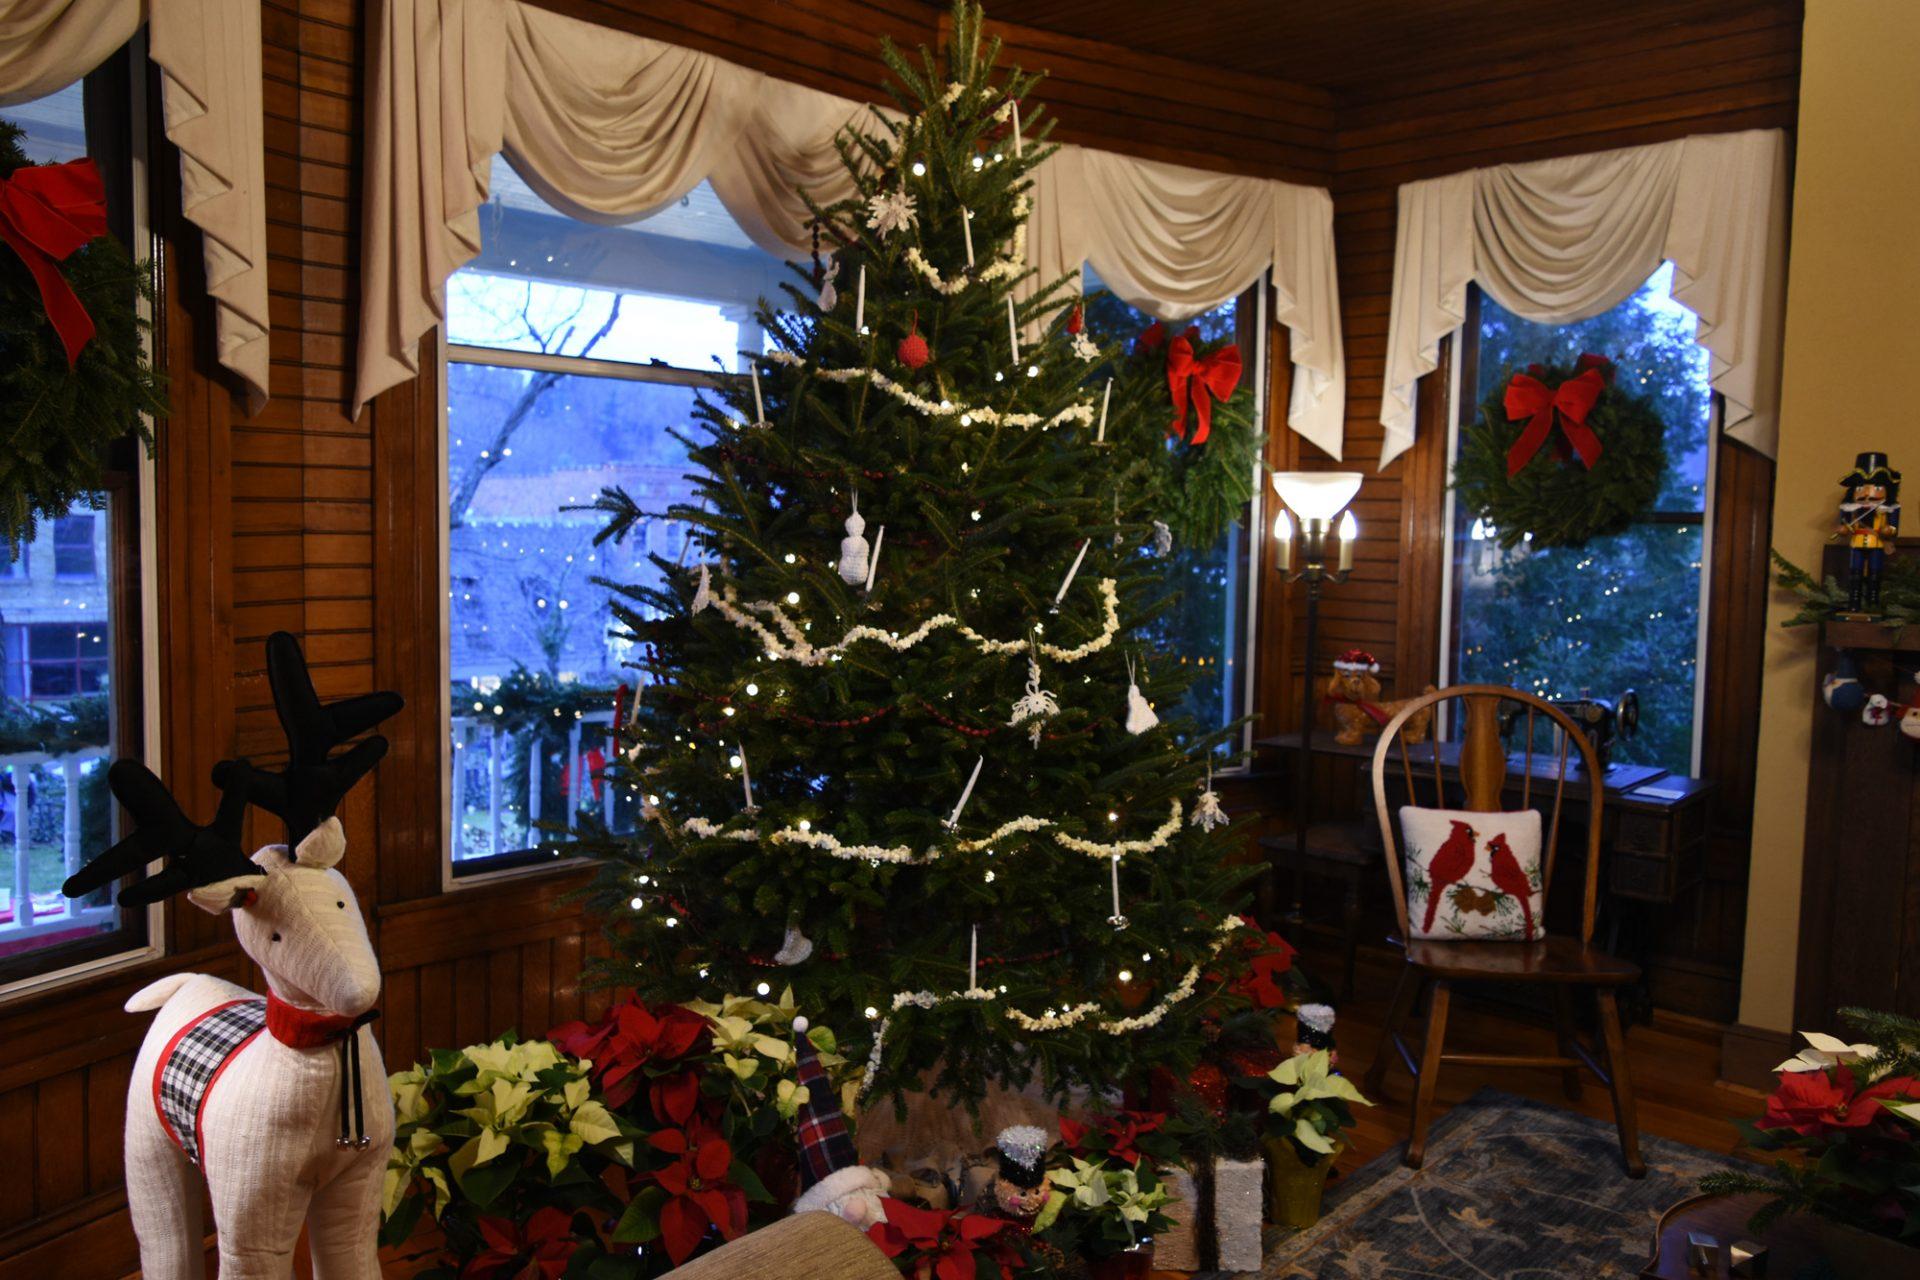 A Christmas tree celebrates the holiday season inside the Jones House.